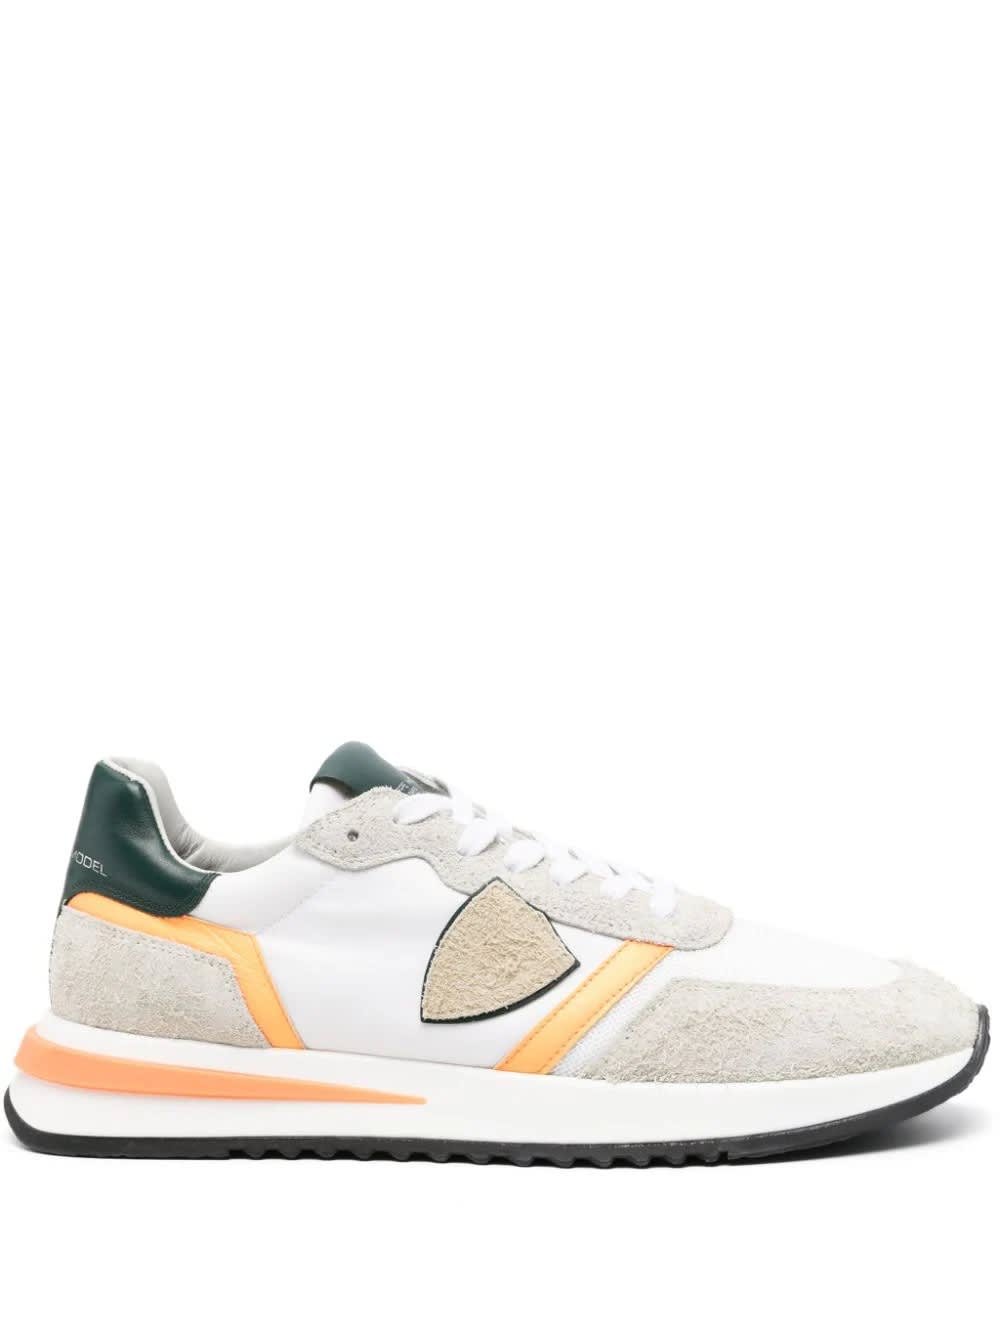 Tropez 2.1 Low Sneakers - White And Orange